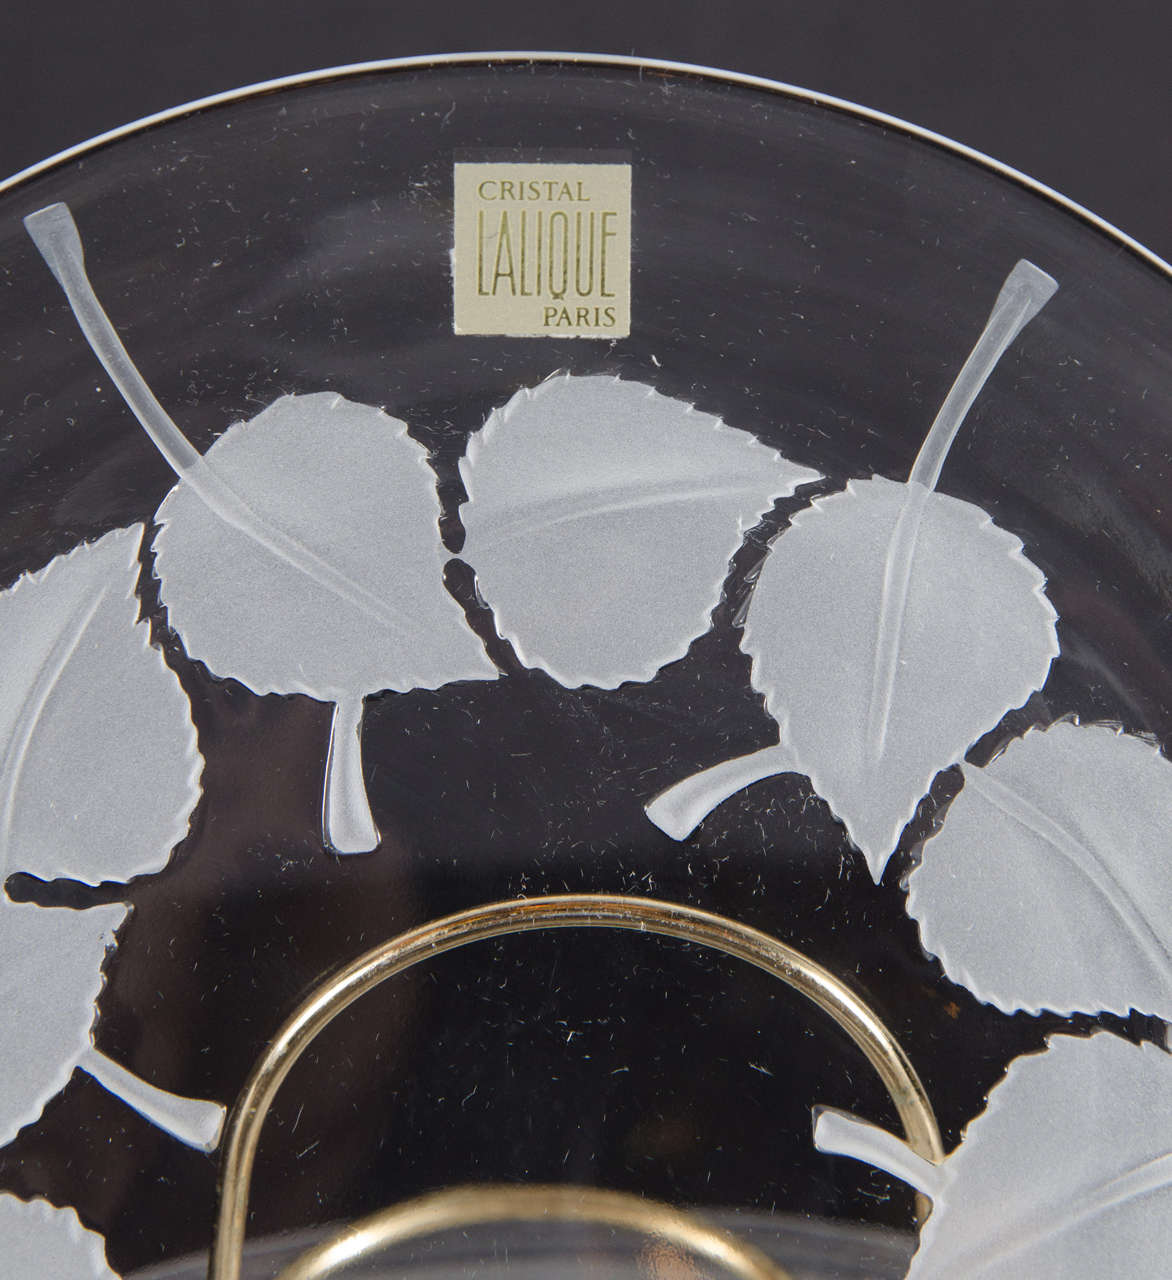 Set of Ten Lalique Glass Plates in Circular Art Deco Leaf Pattern Design 1